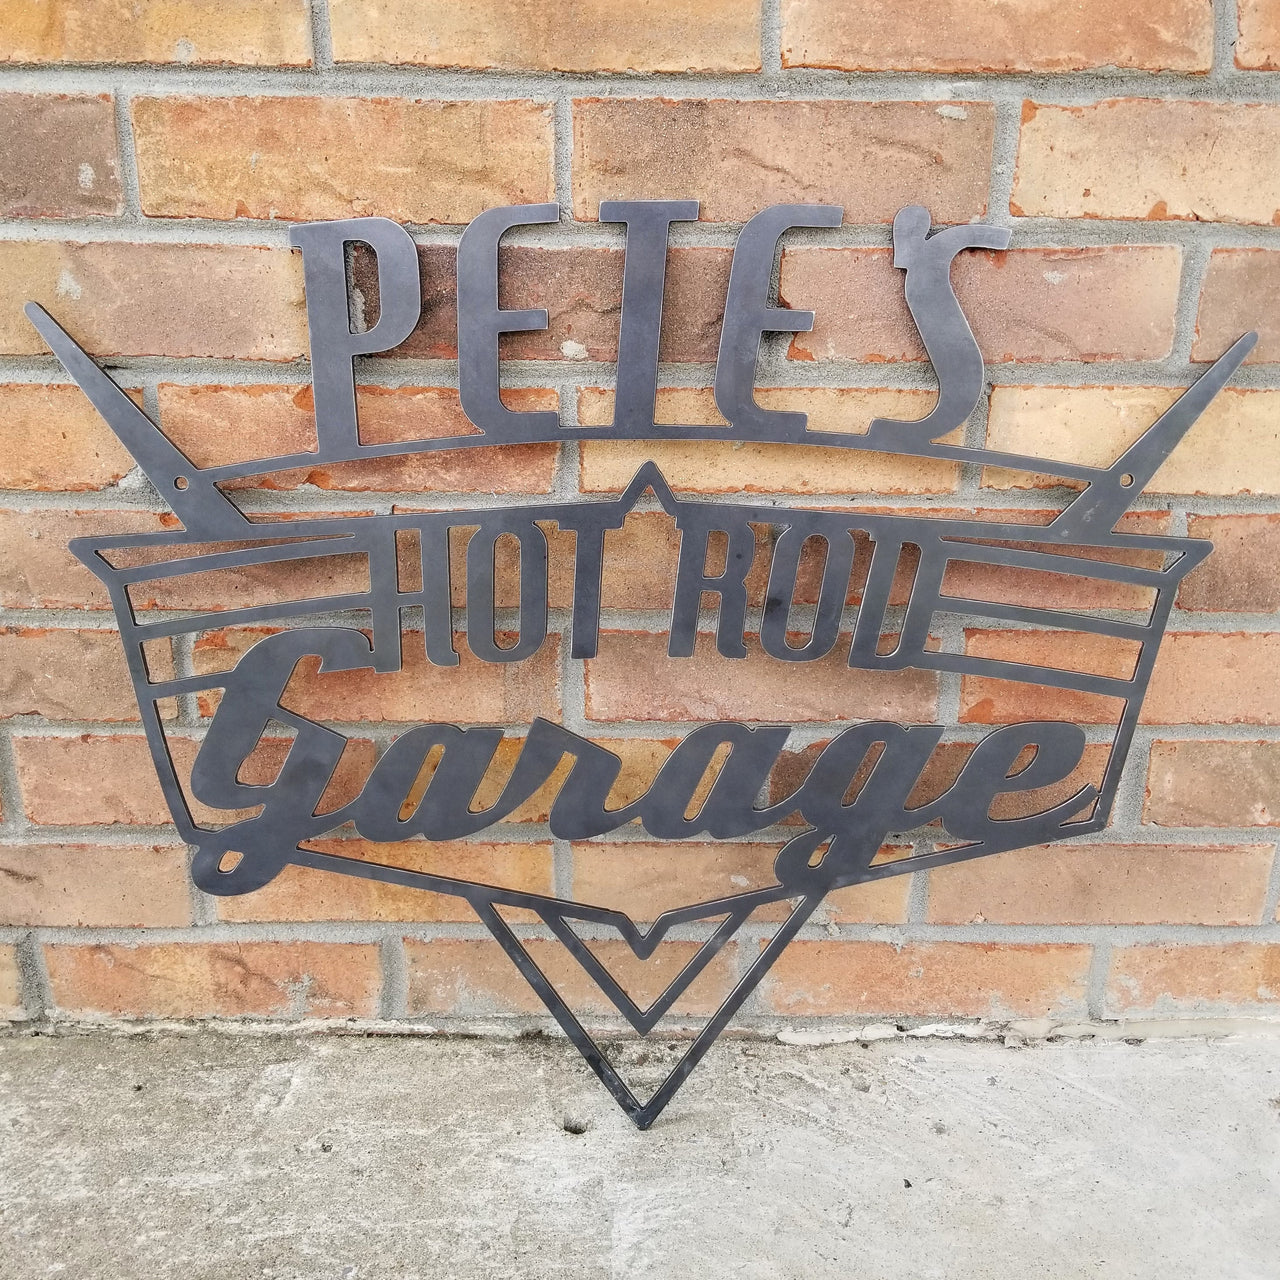 Personalized Hot Rod Garage Sign - Vintage Retro Wall Art - Drag Racing, Rat Rod Roadster Decor